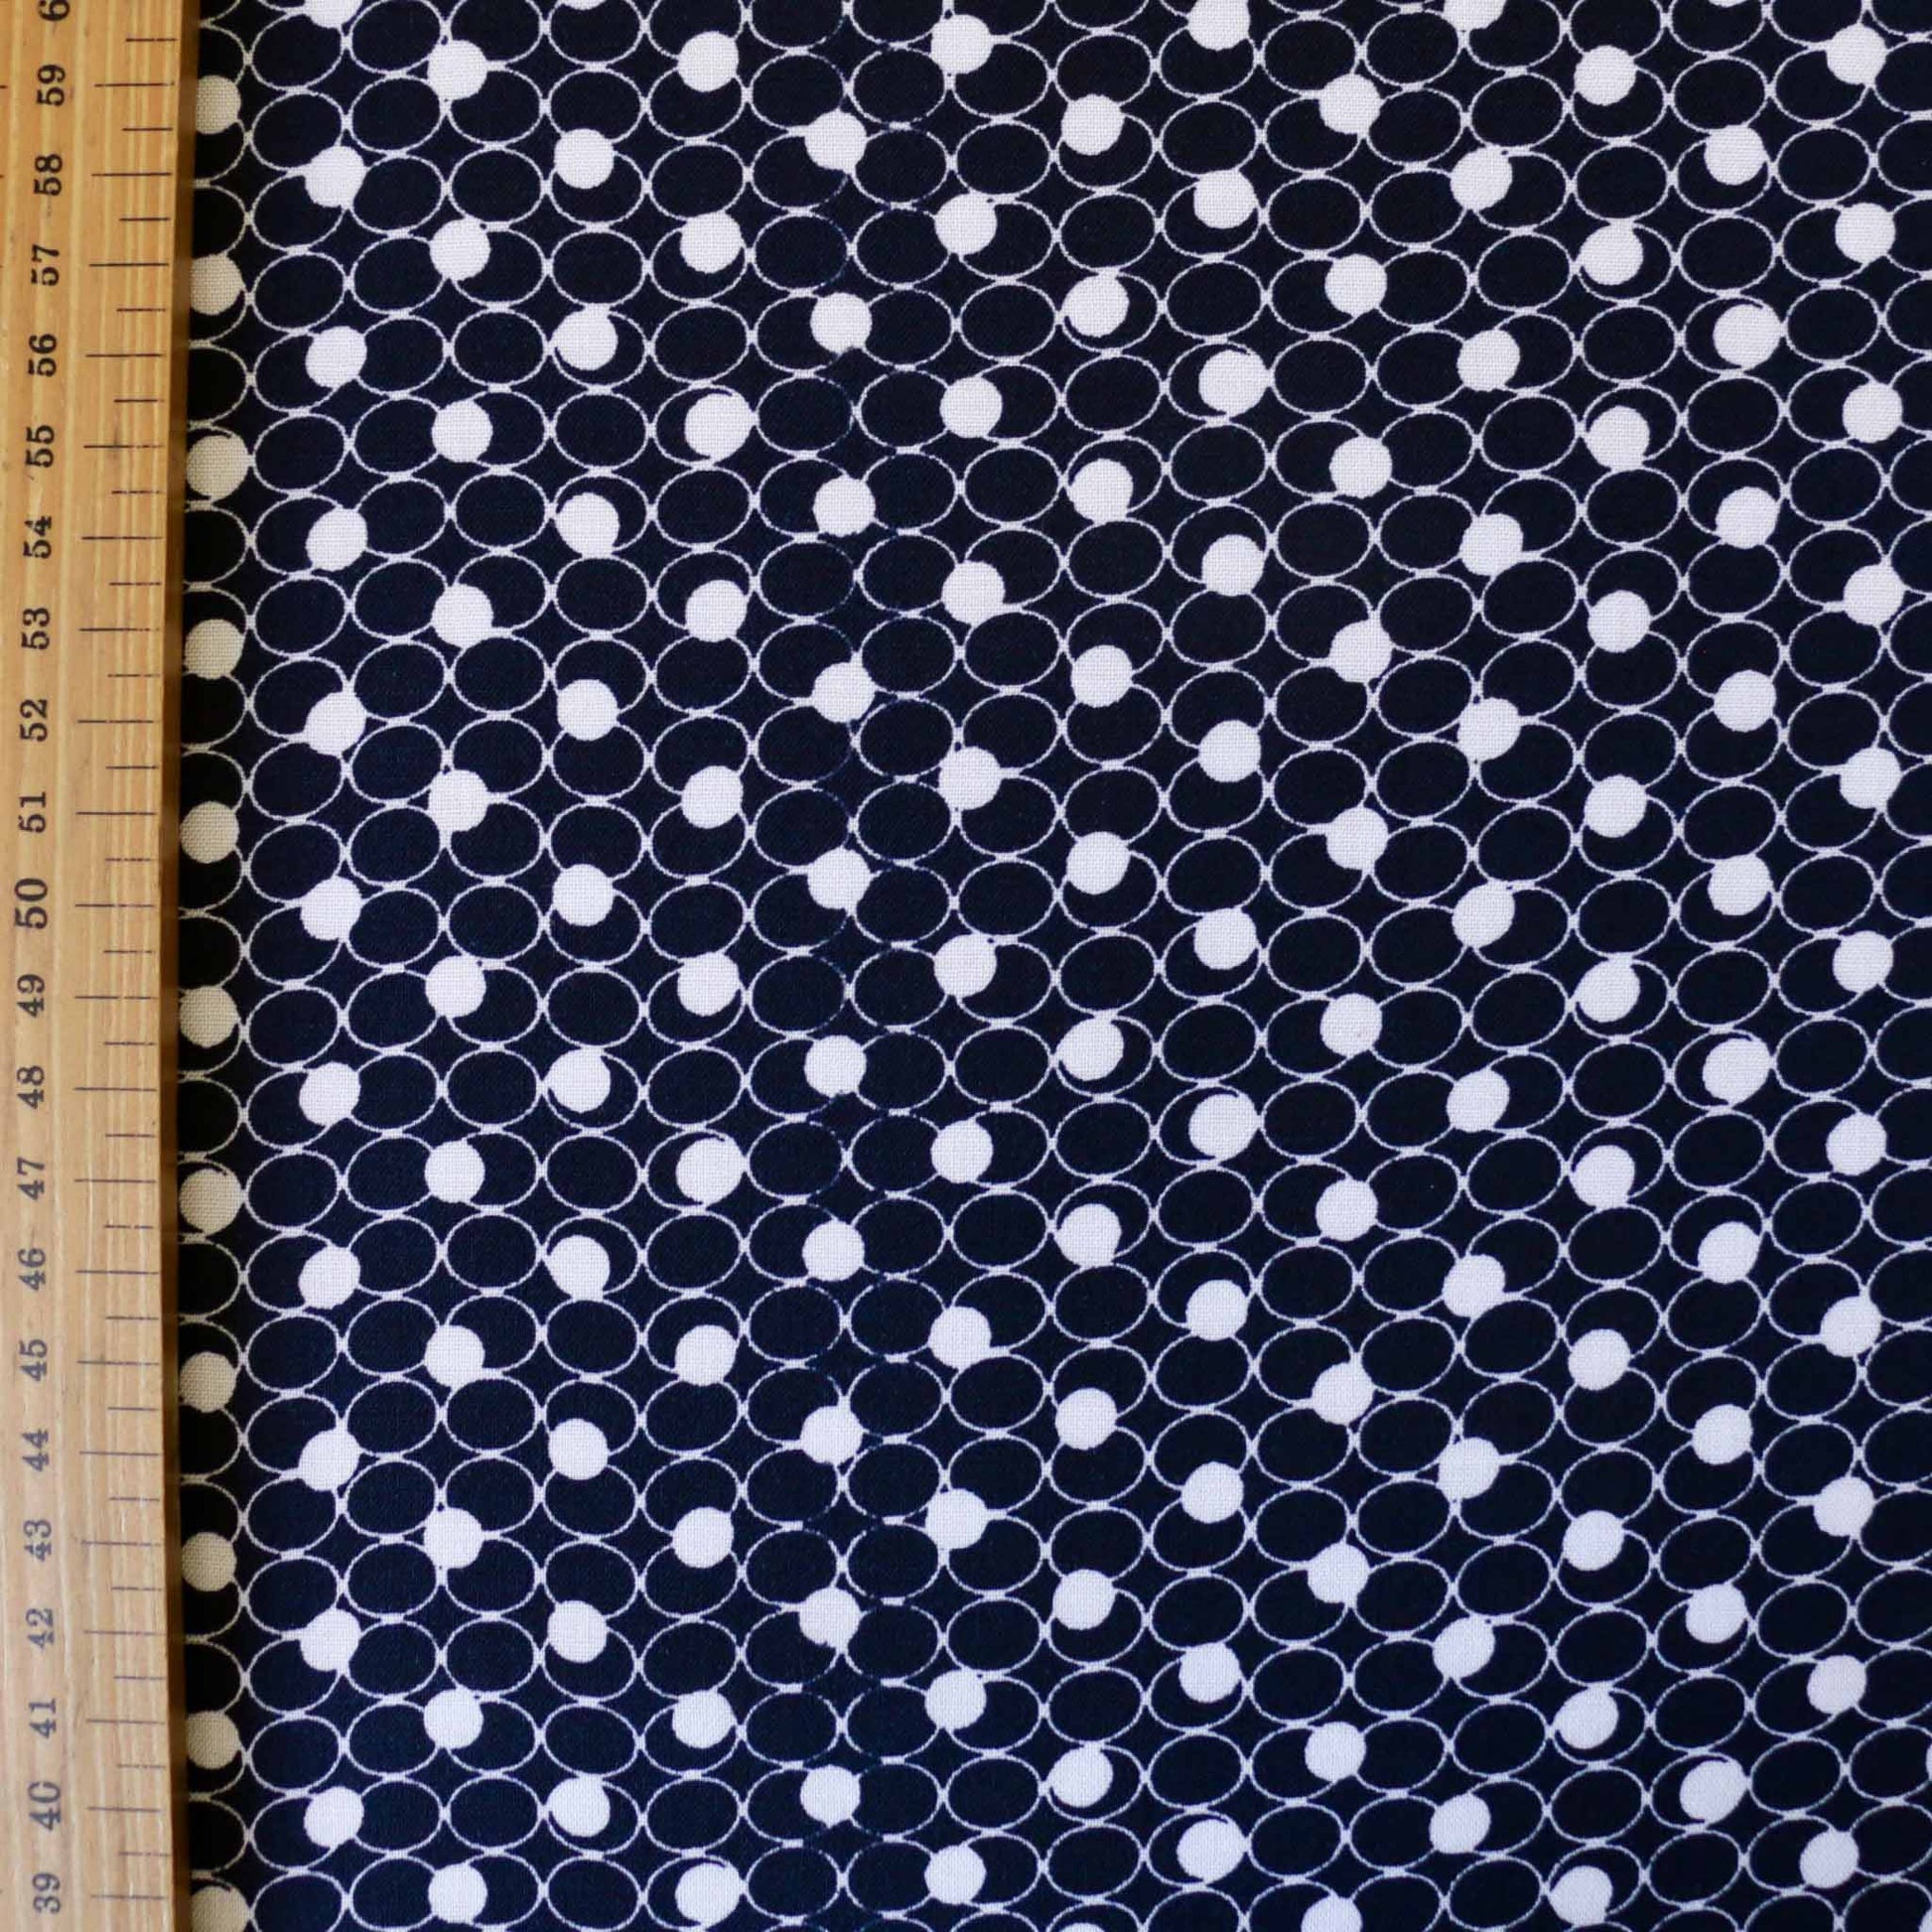 metre navy blue viscose challis dressmaking fabric with white circles printed in geometric design